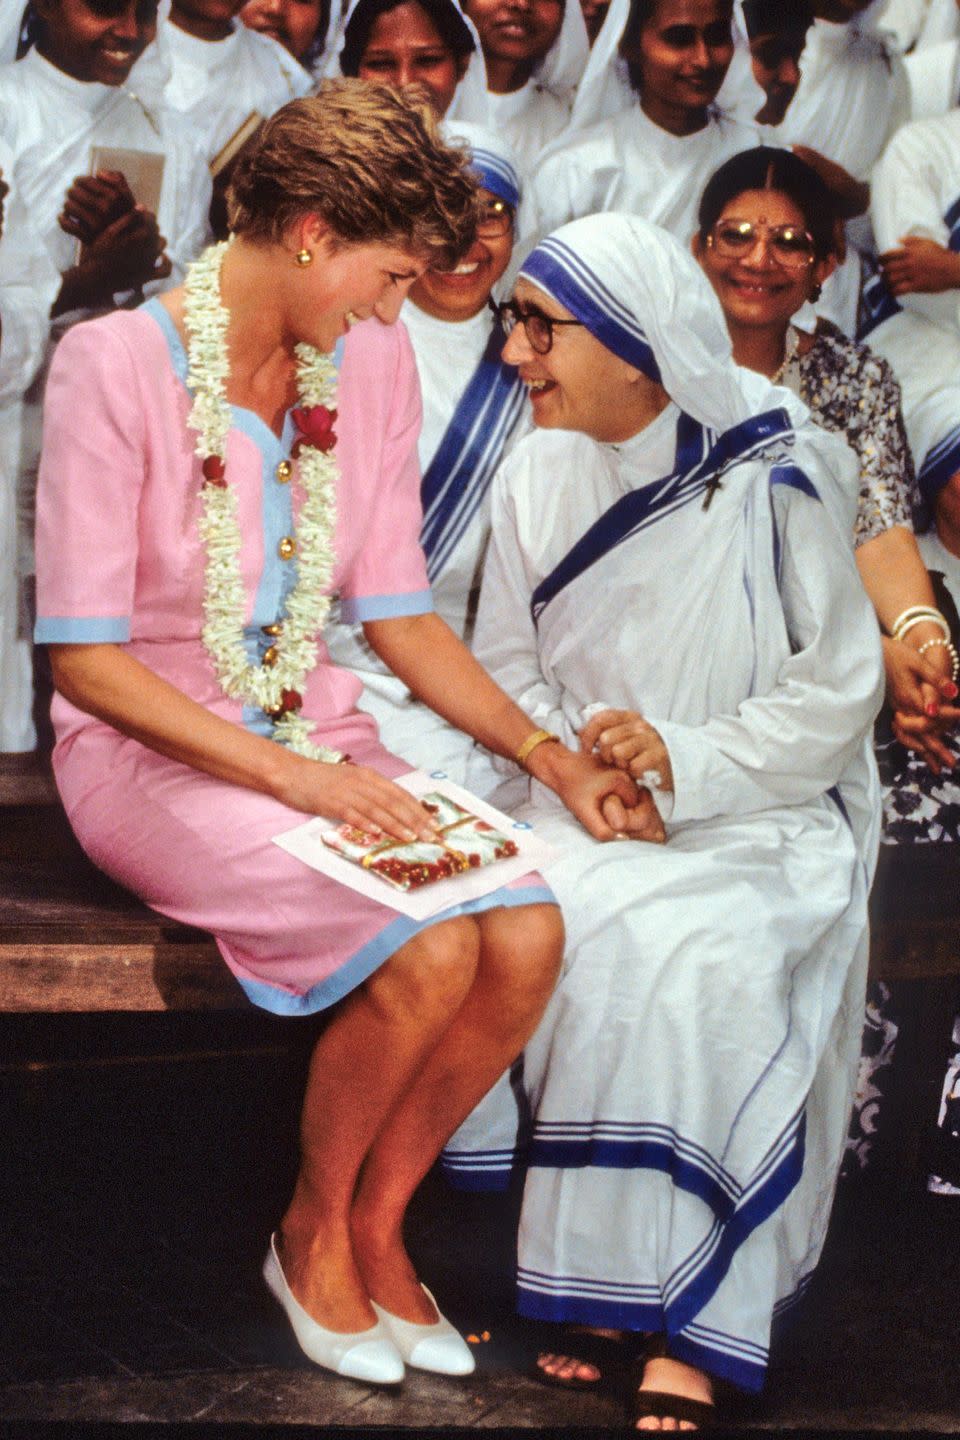 5) Mother Teresa